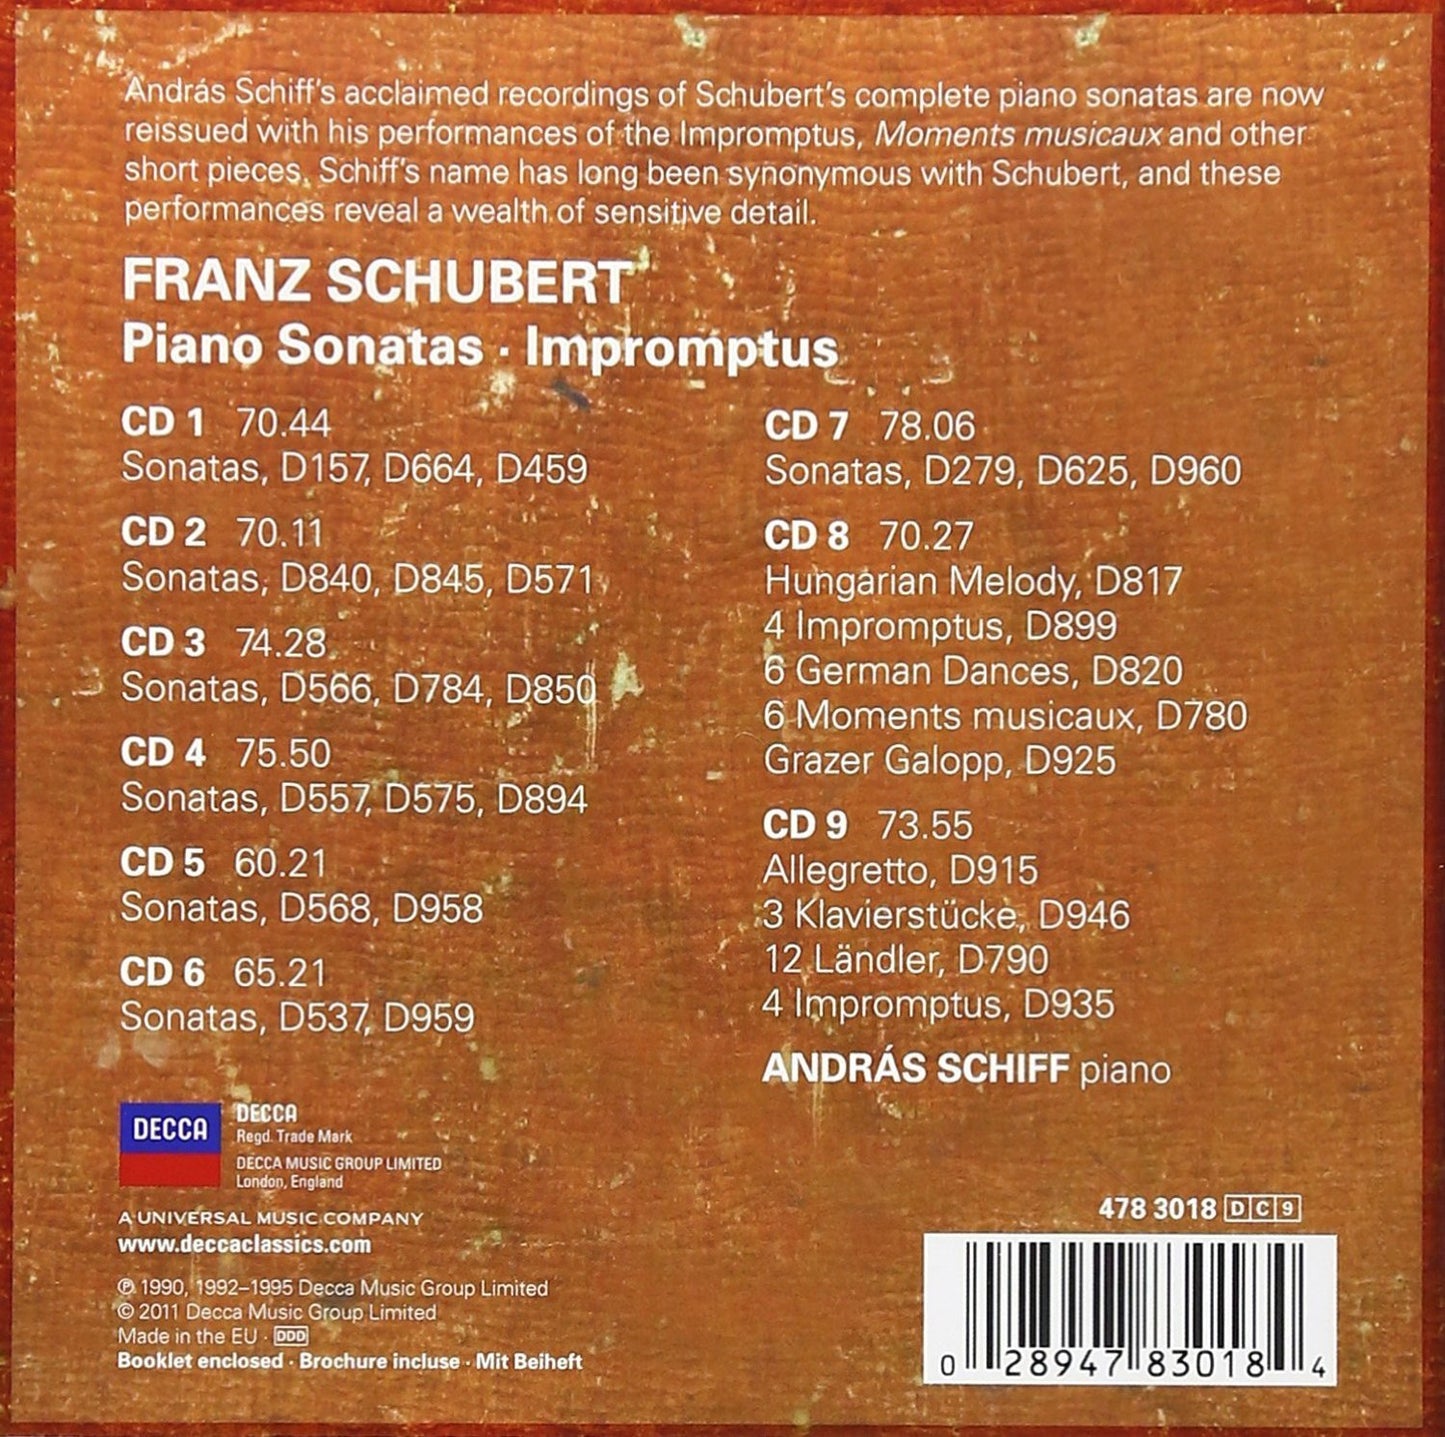 SCHUBERT:  PIANO SONATAS, IMPROMPTUS - ANDRAS SCHIFF (9 CDS)